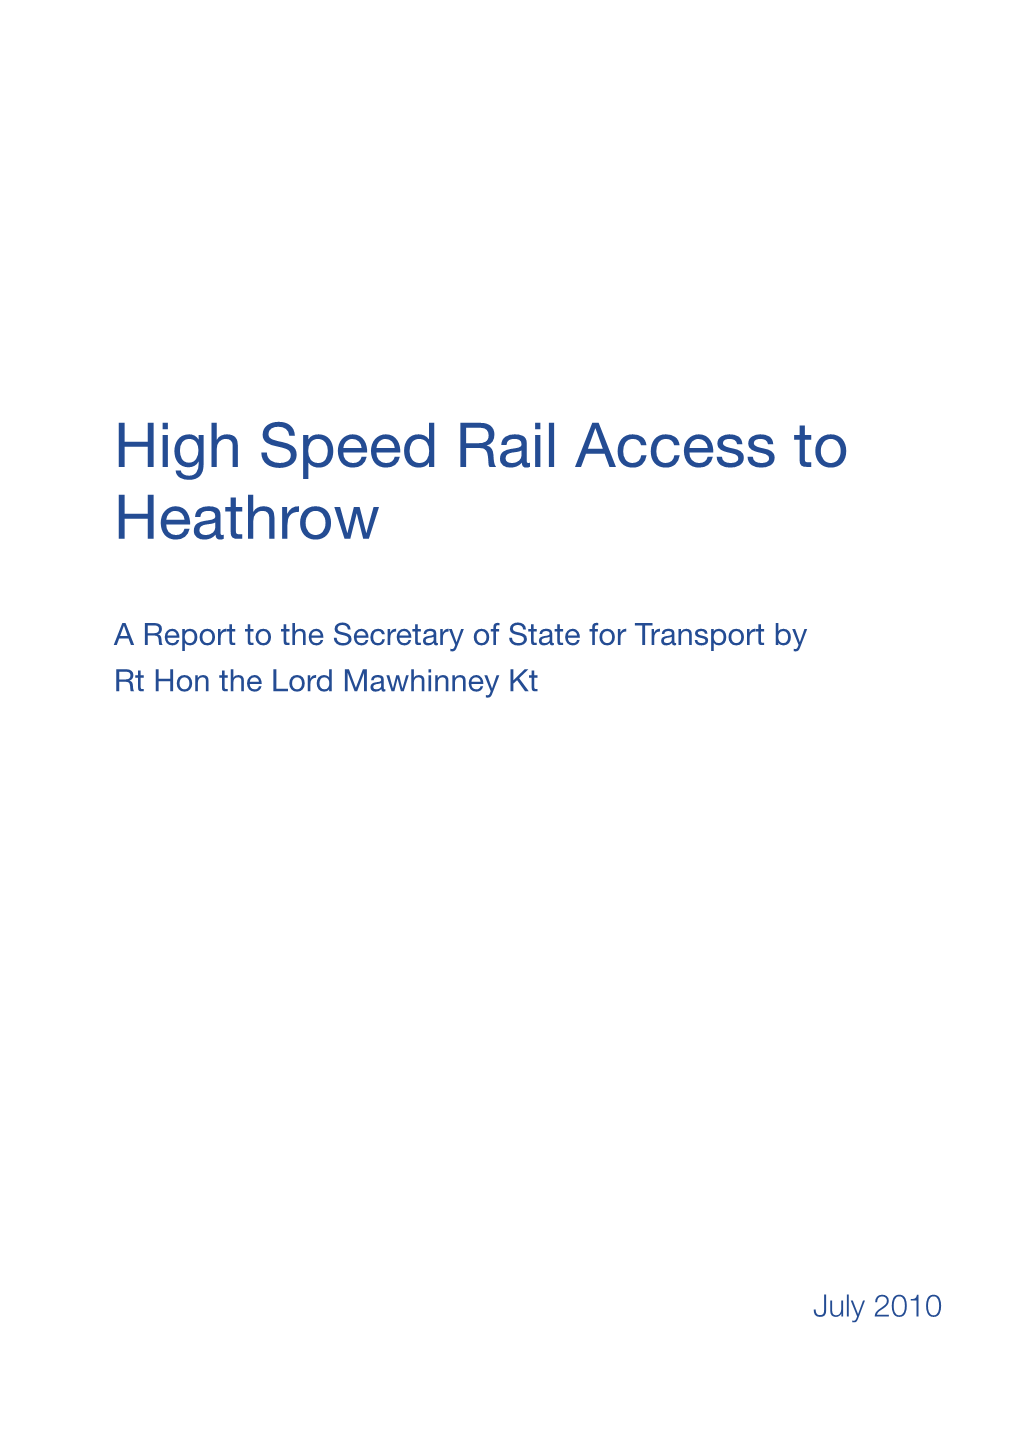 High Speed Rail Access to Heathrow